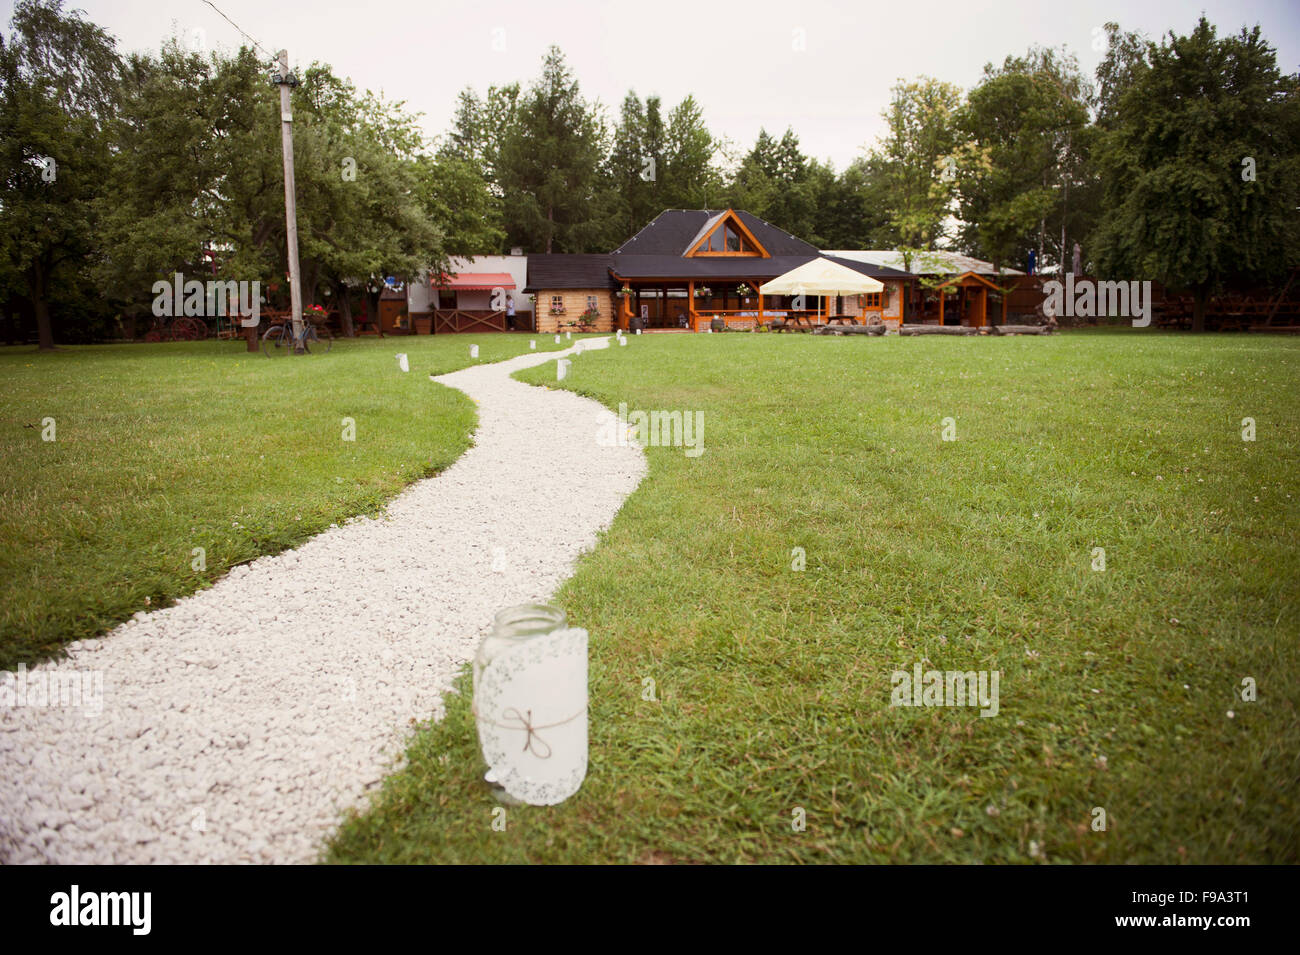 Beautiful outdoor wedding venue in summer park Stock Photo